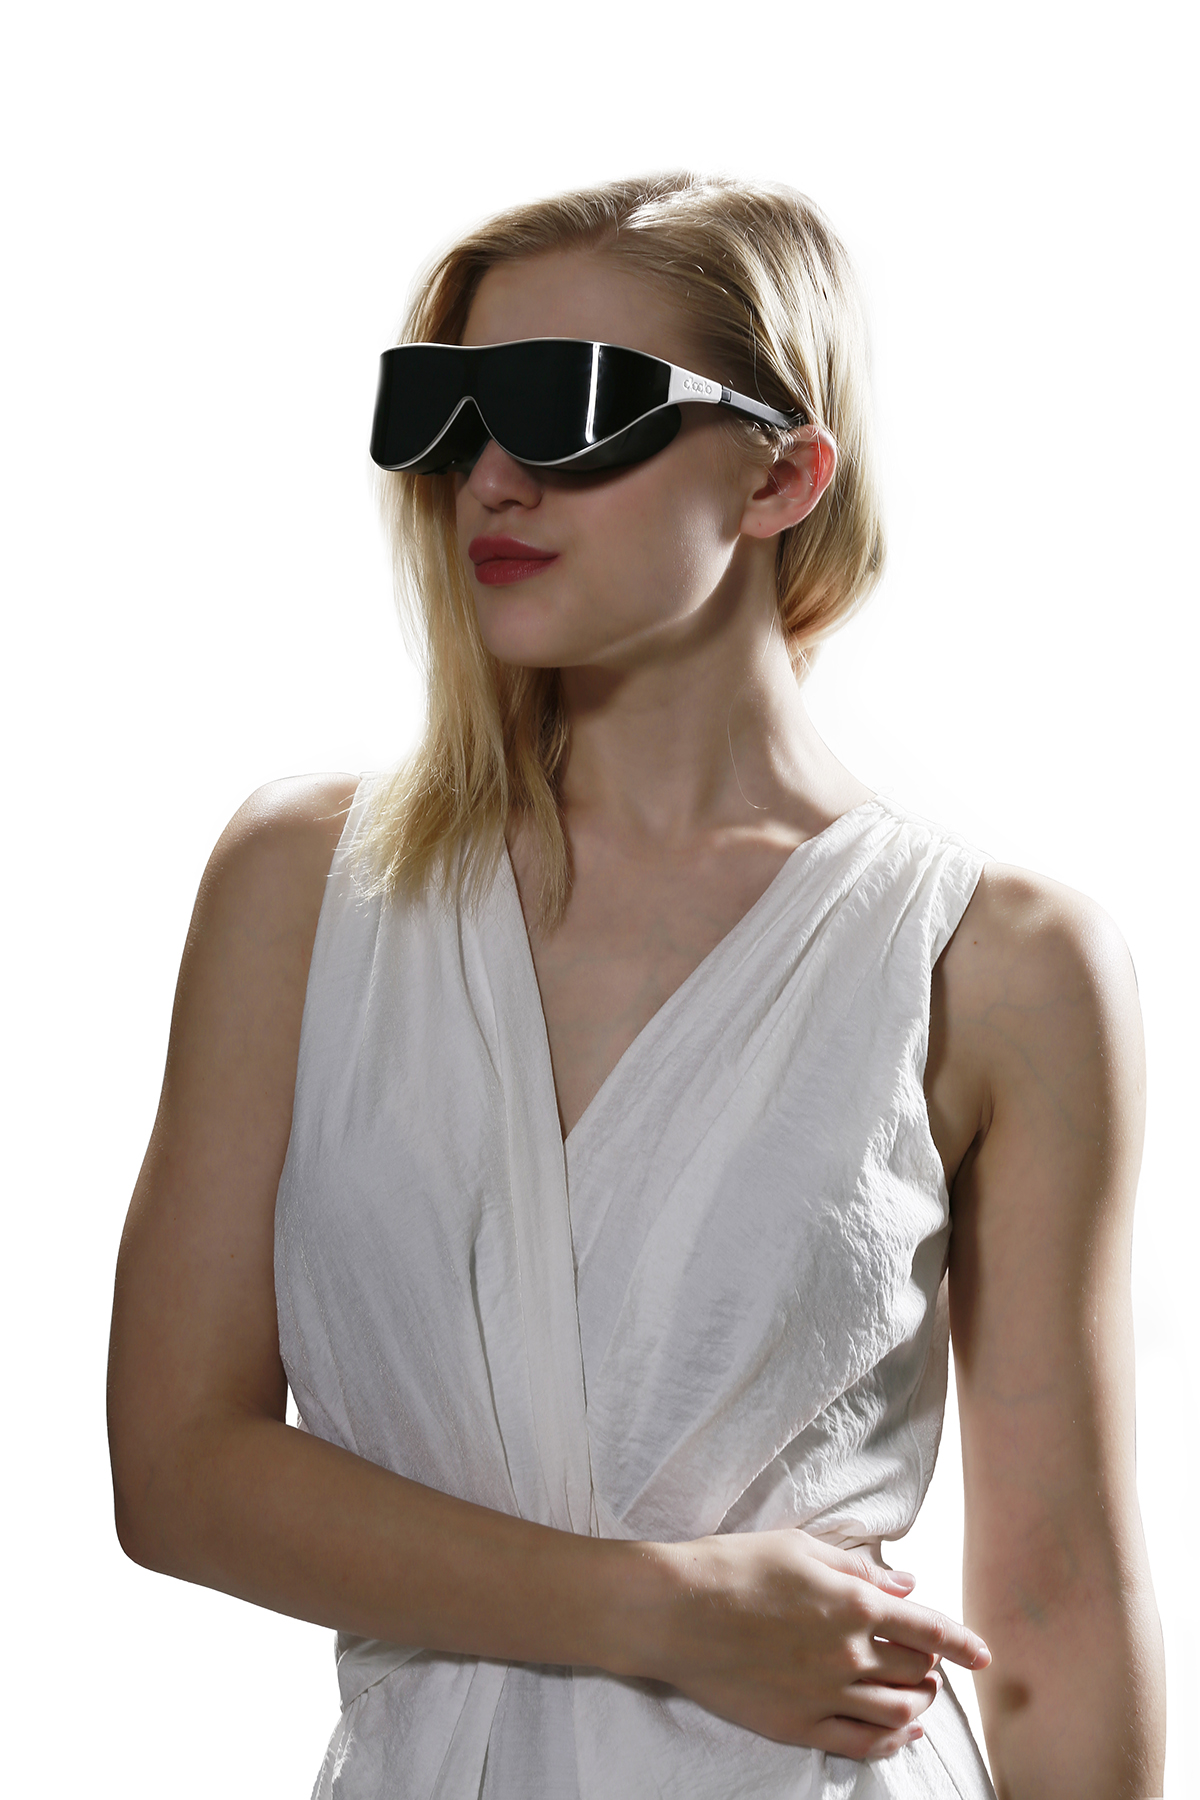 World’s Lightest Wireless Immersive Virtual Reality Glasses Emerge: Dlodlo